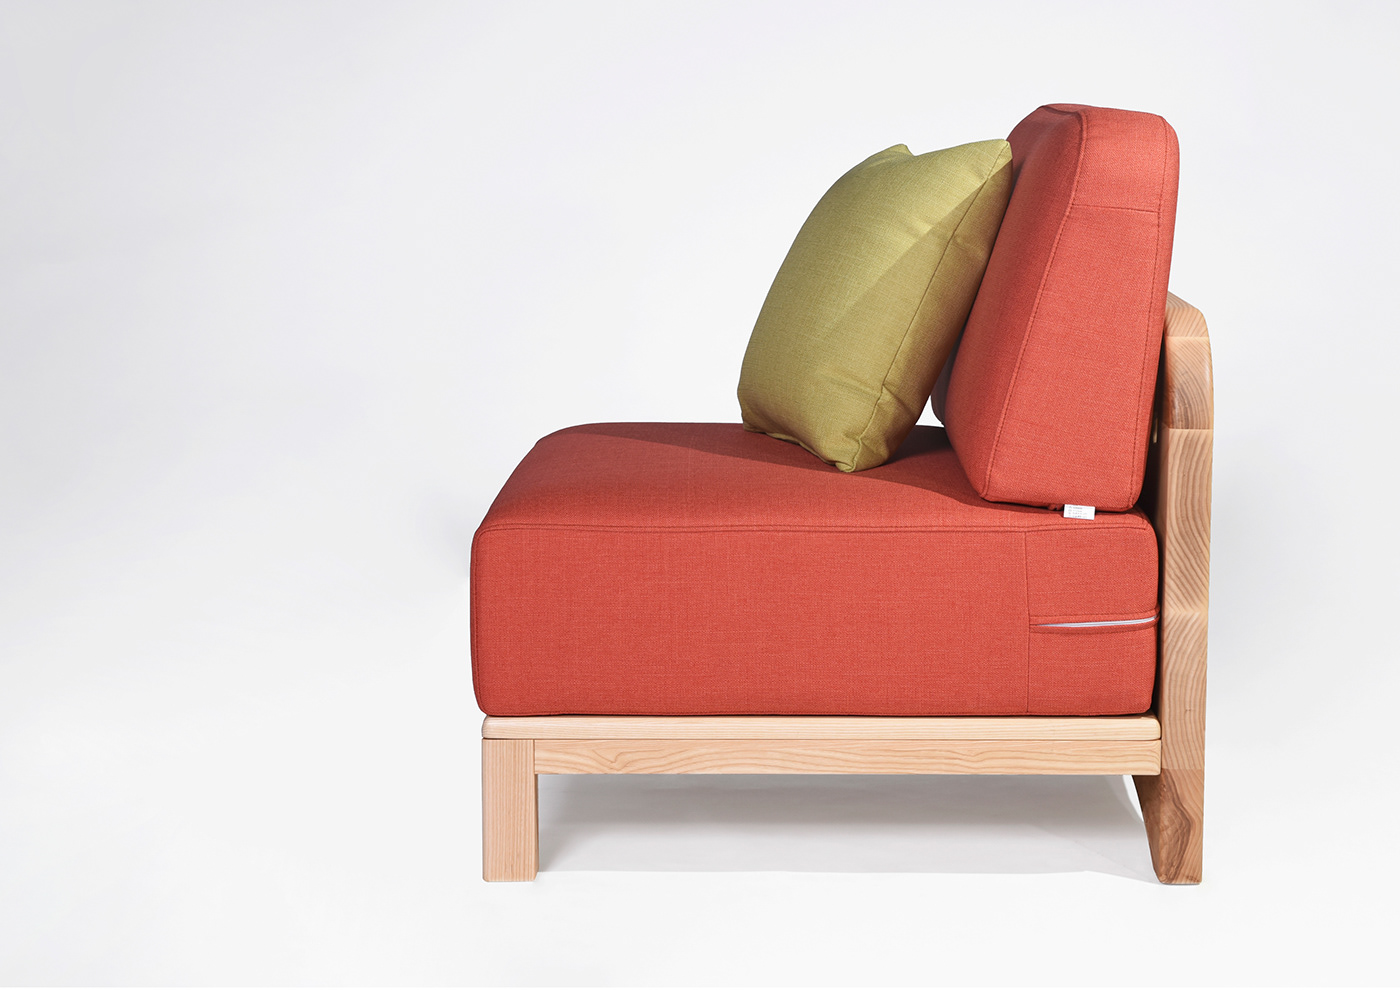 furniture design  industrial design  wooden sofa modular design sofa Couch furniture